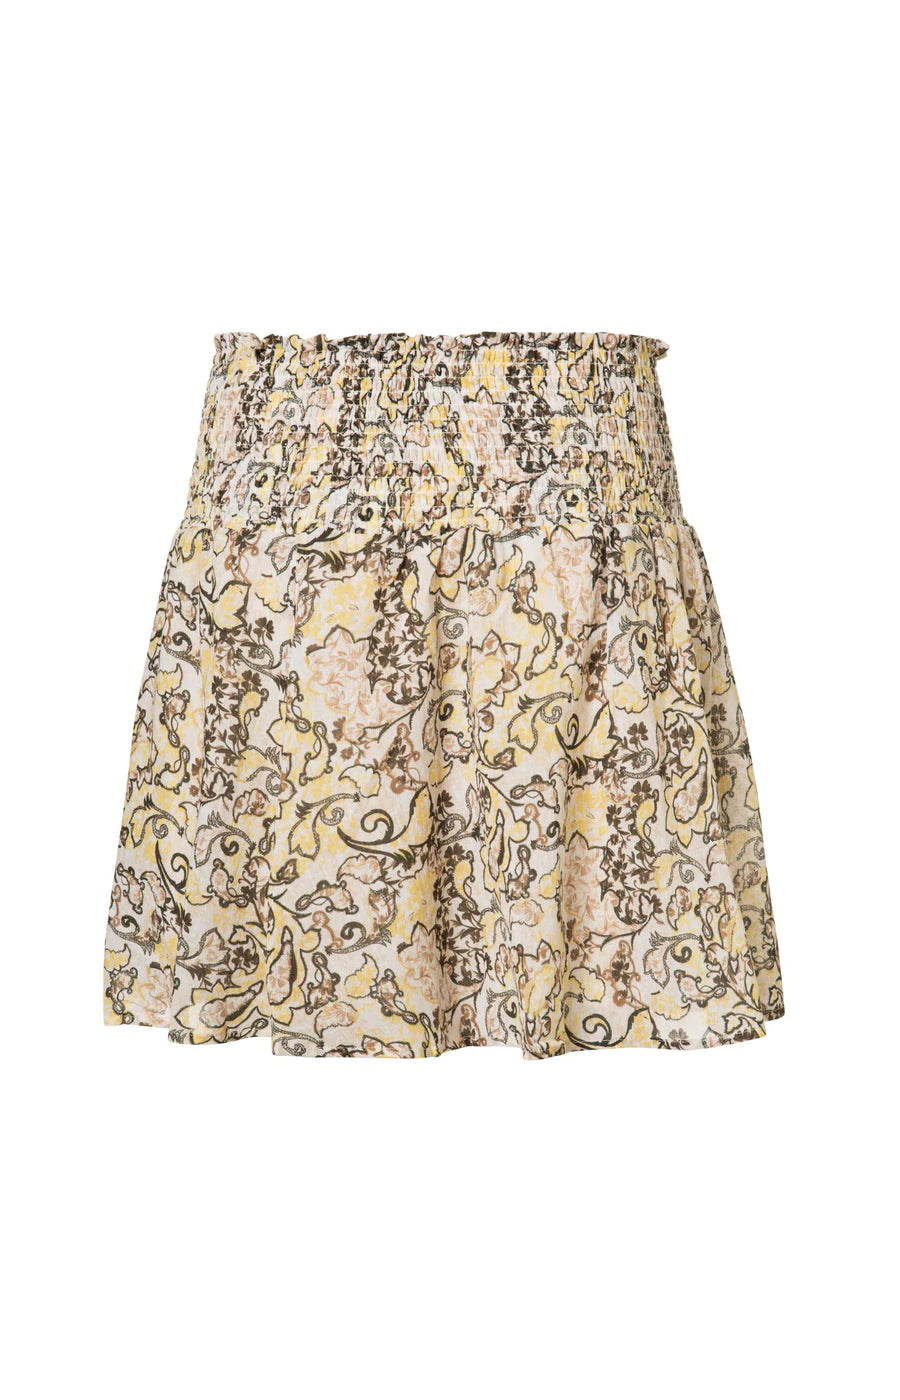 Floral Smocked Print Skirt